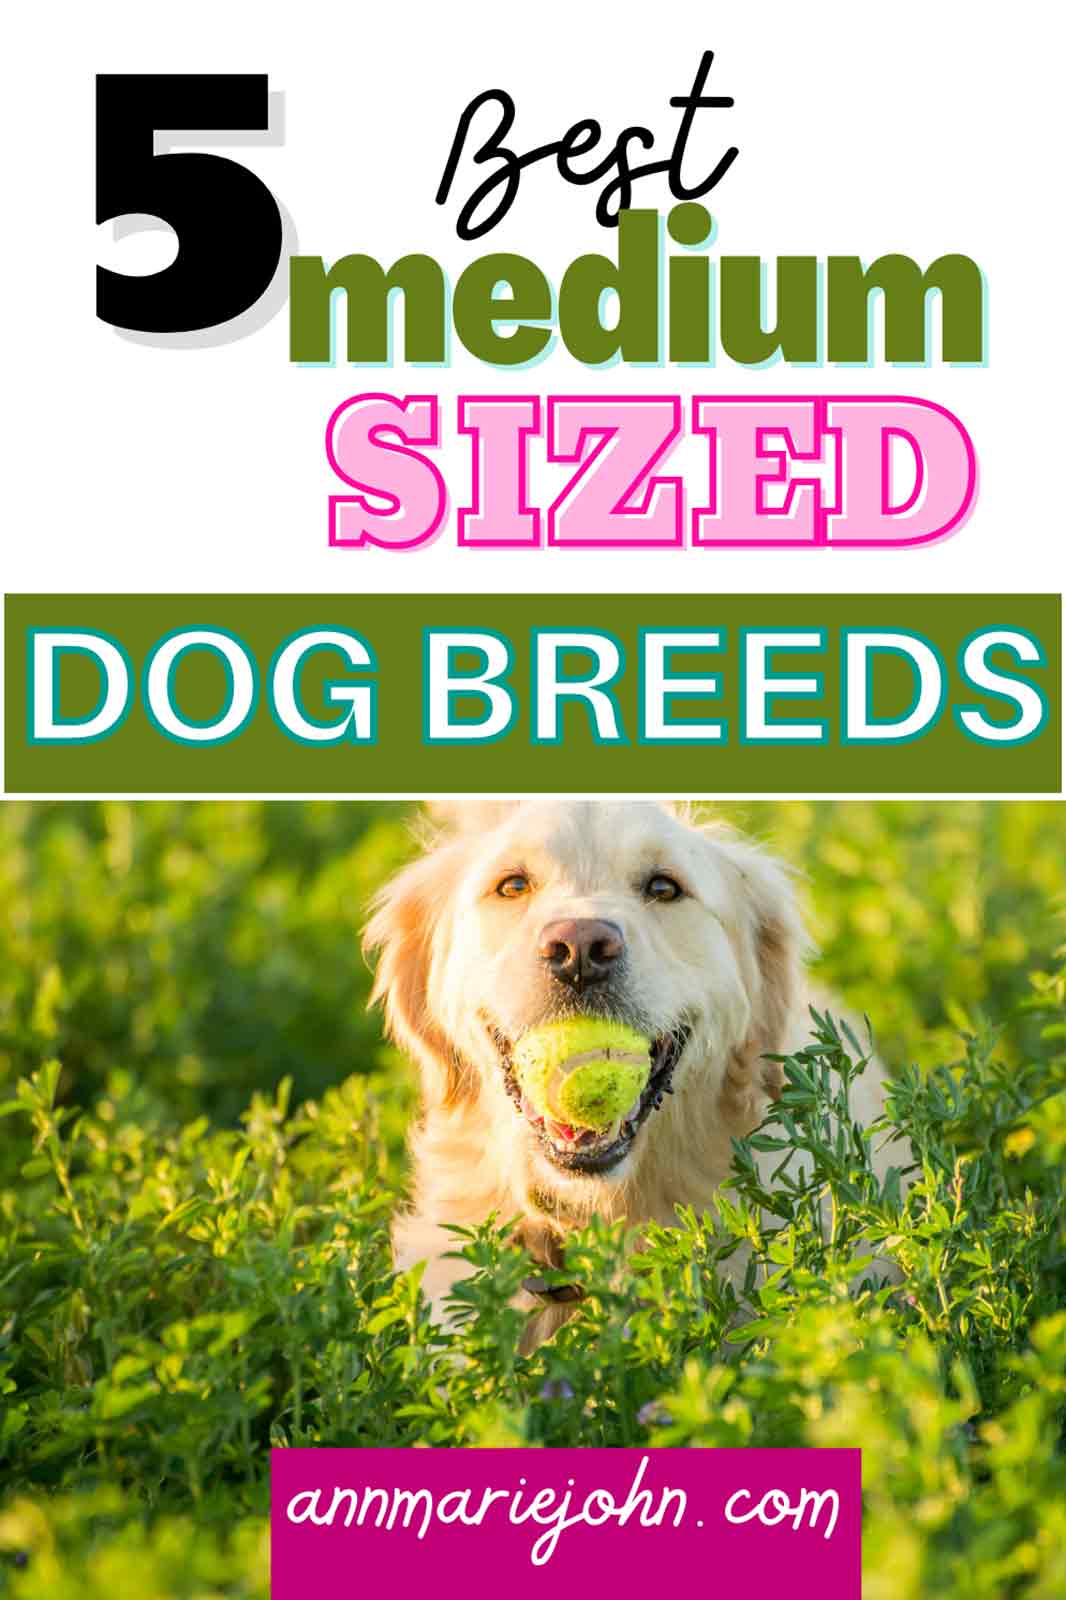 The Best Medium-Sized Dog Breeds